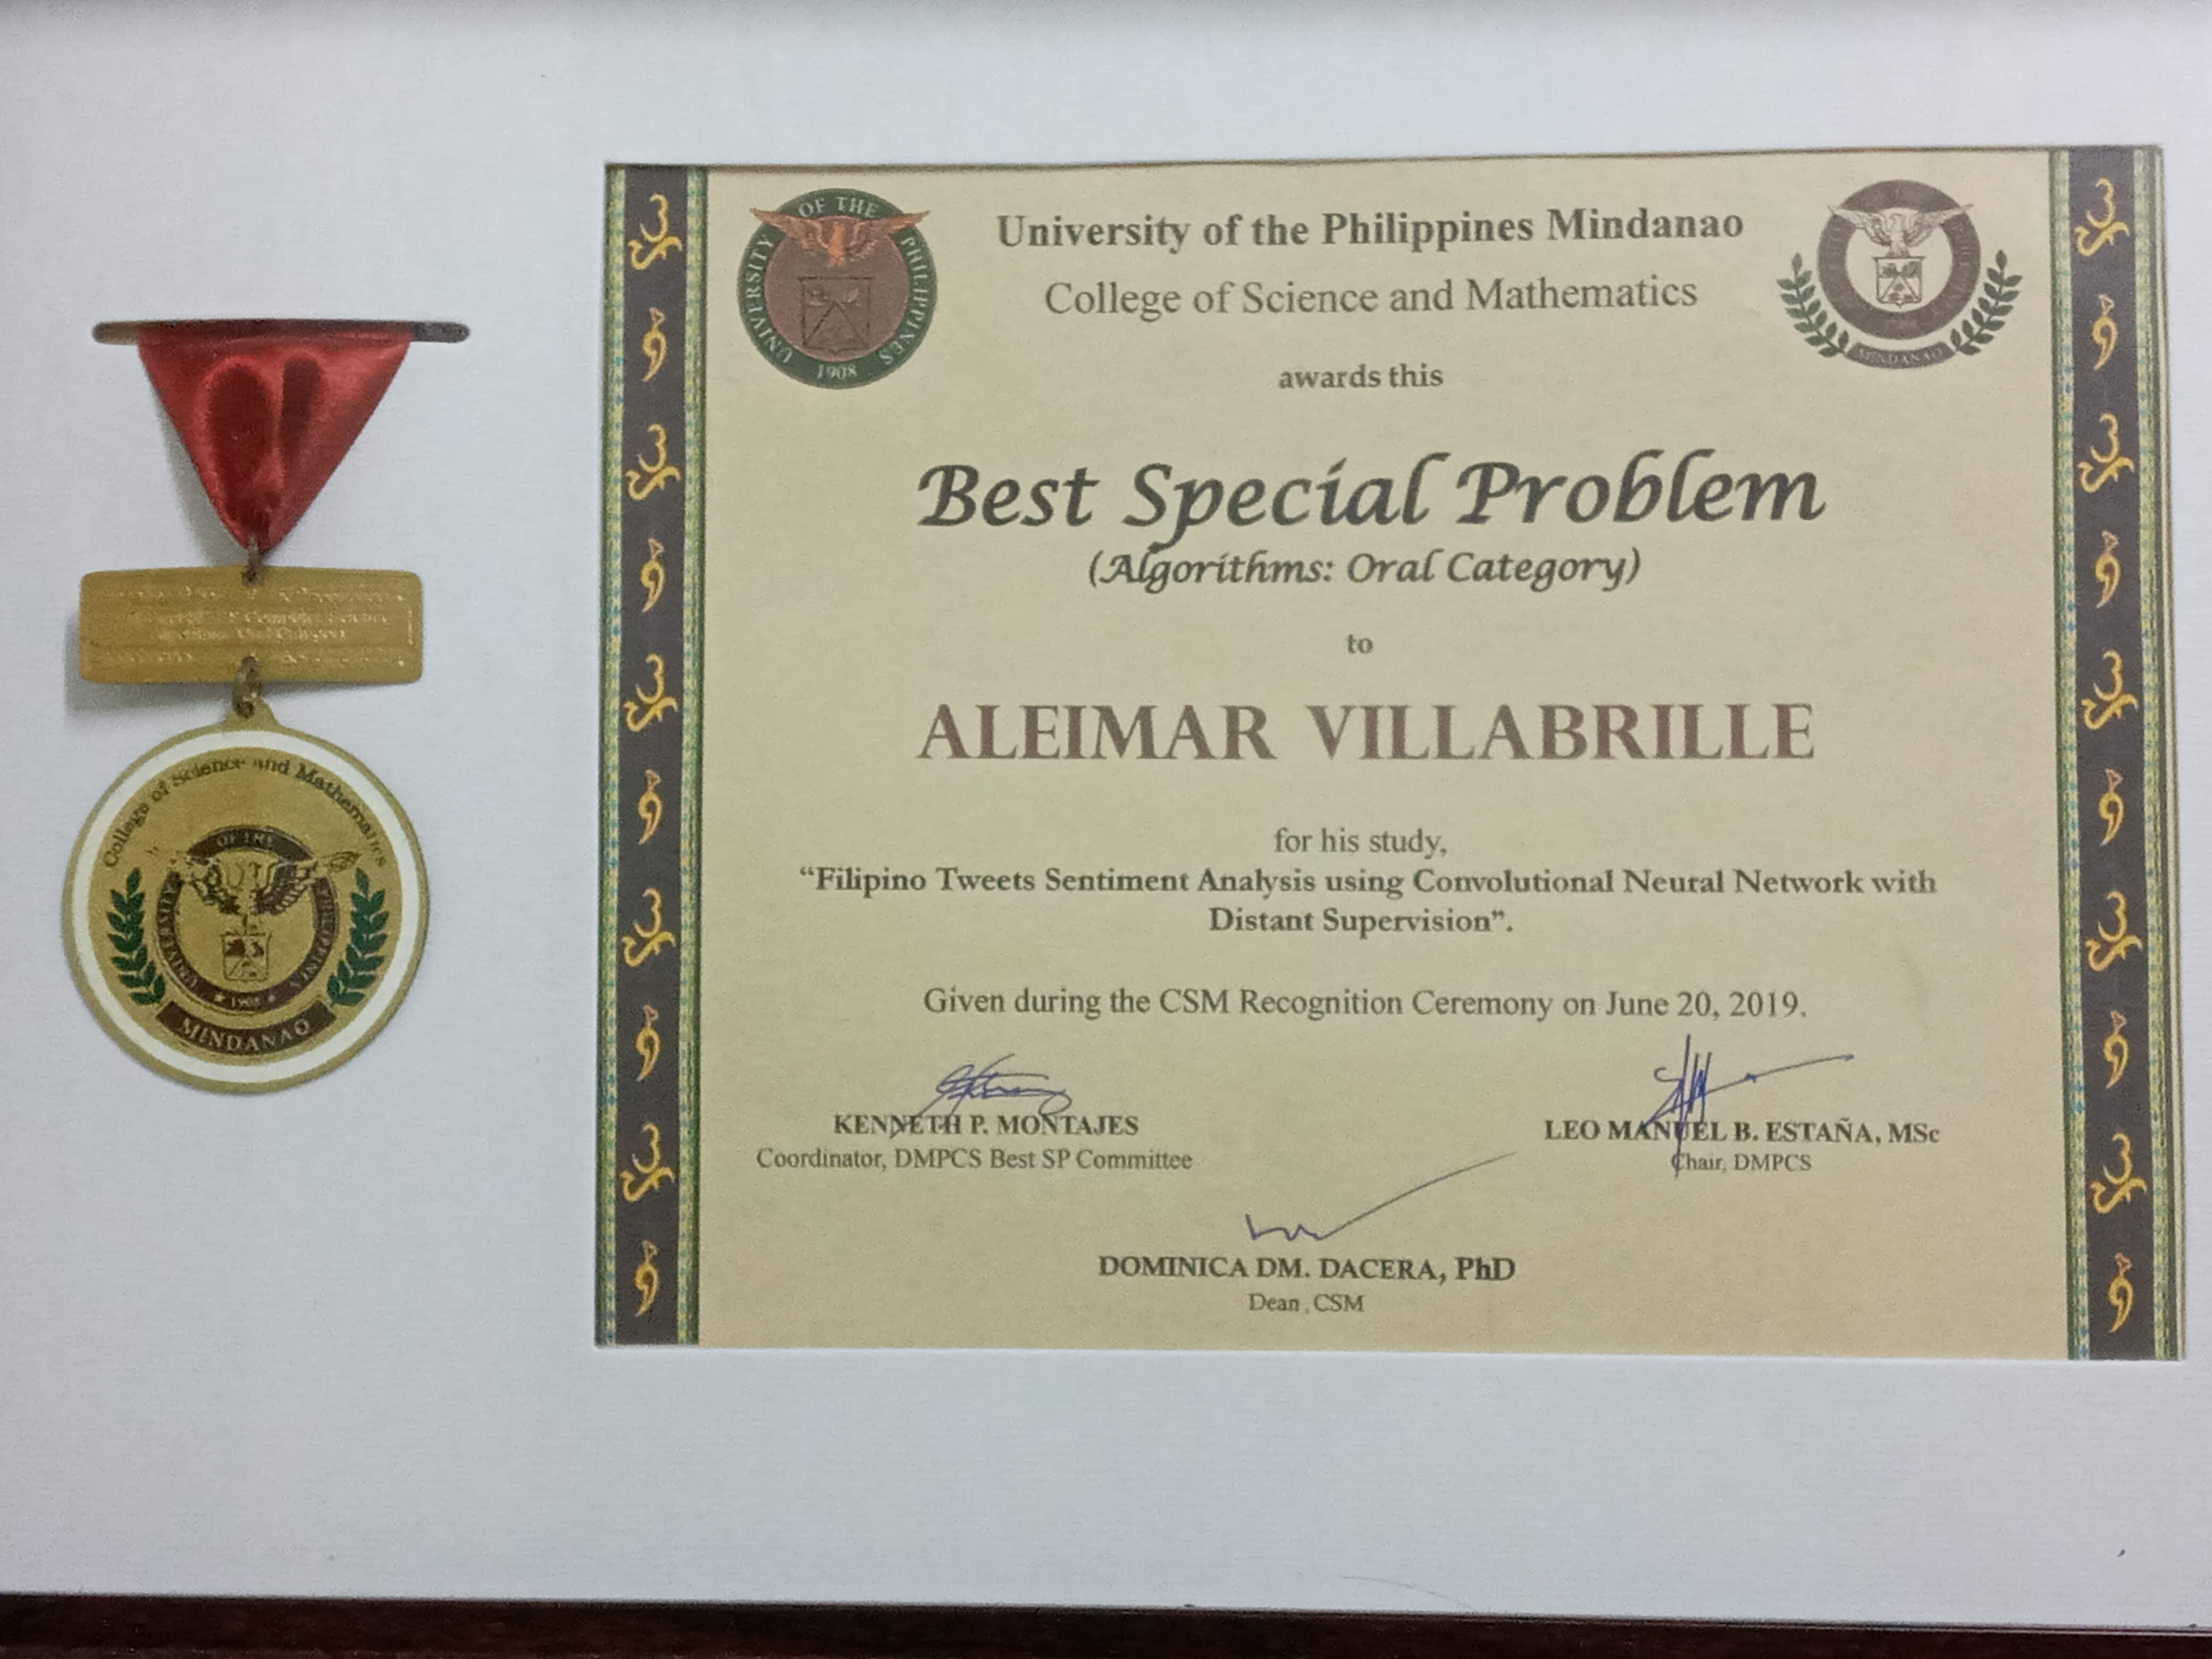 Best Special Problem Award